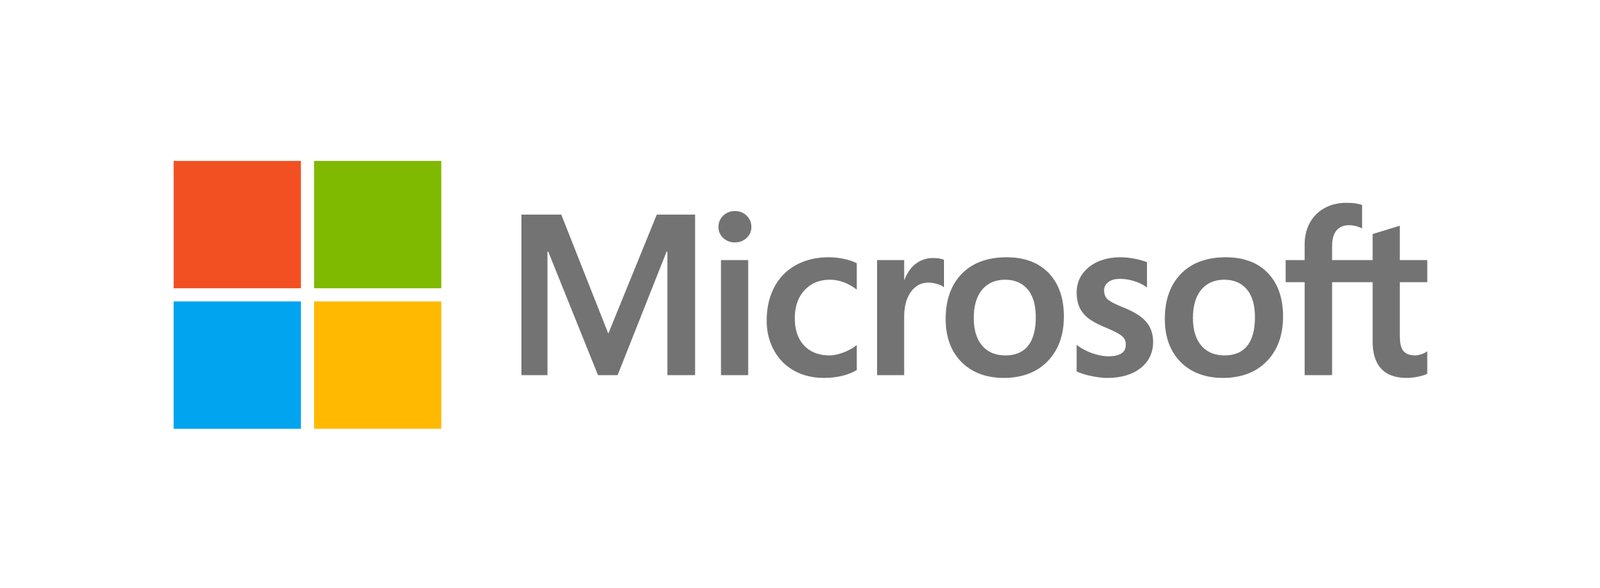 8867.Microsoft 5F00 Logo 2D00 for 2D00 screen 1